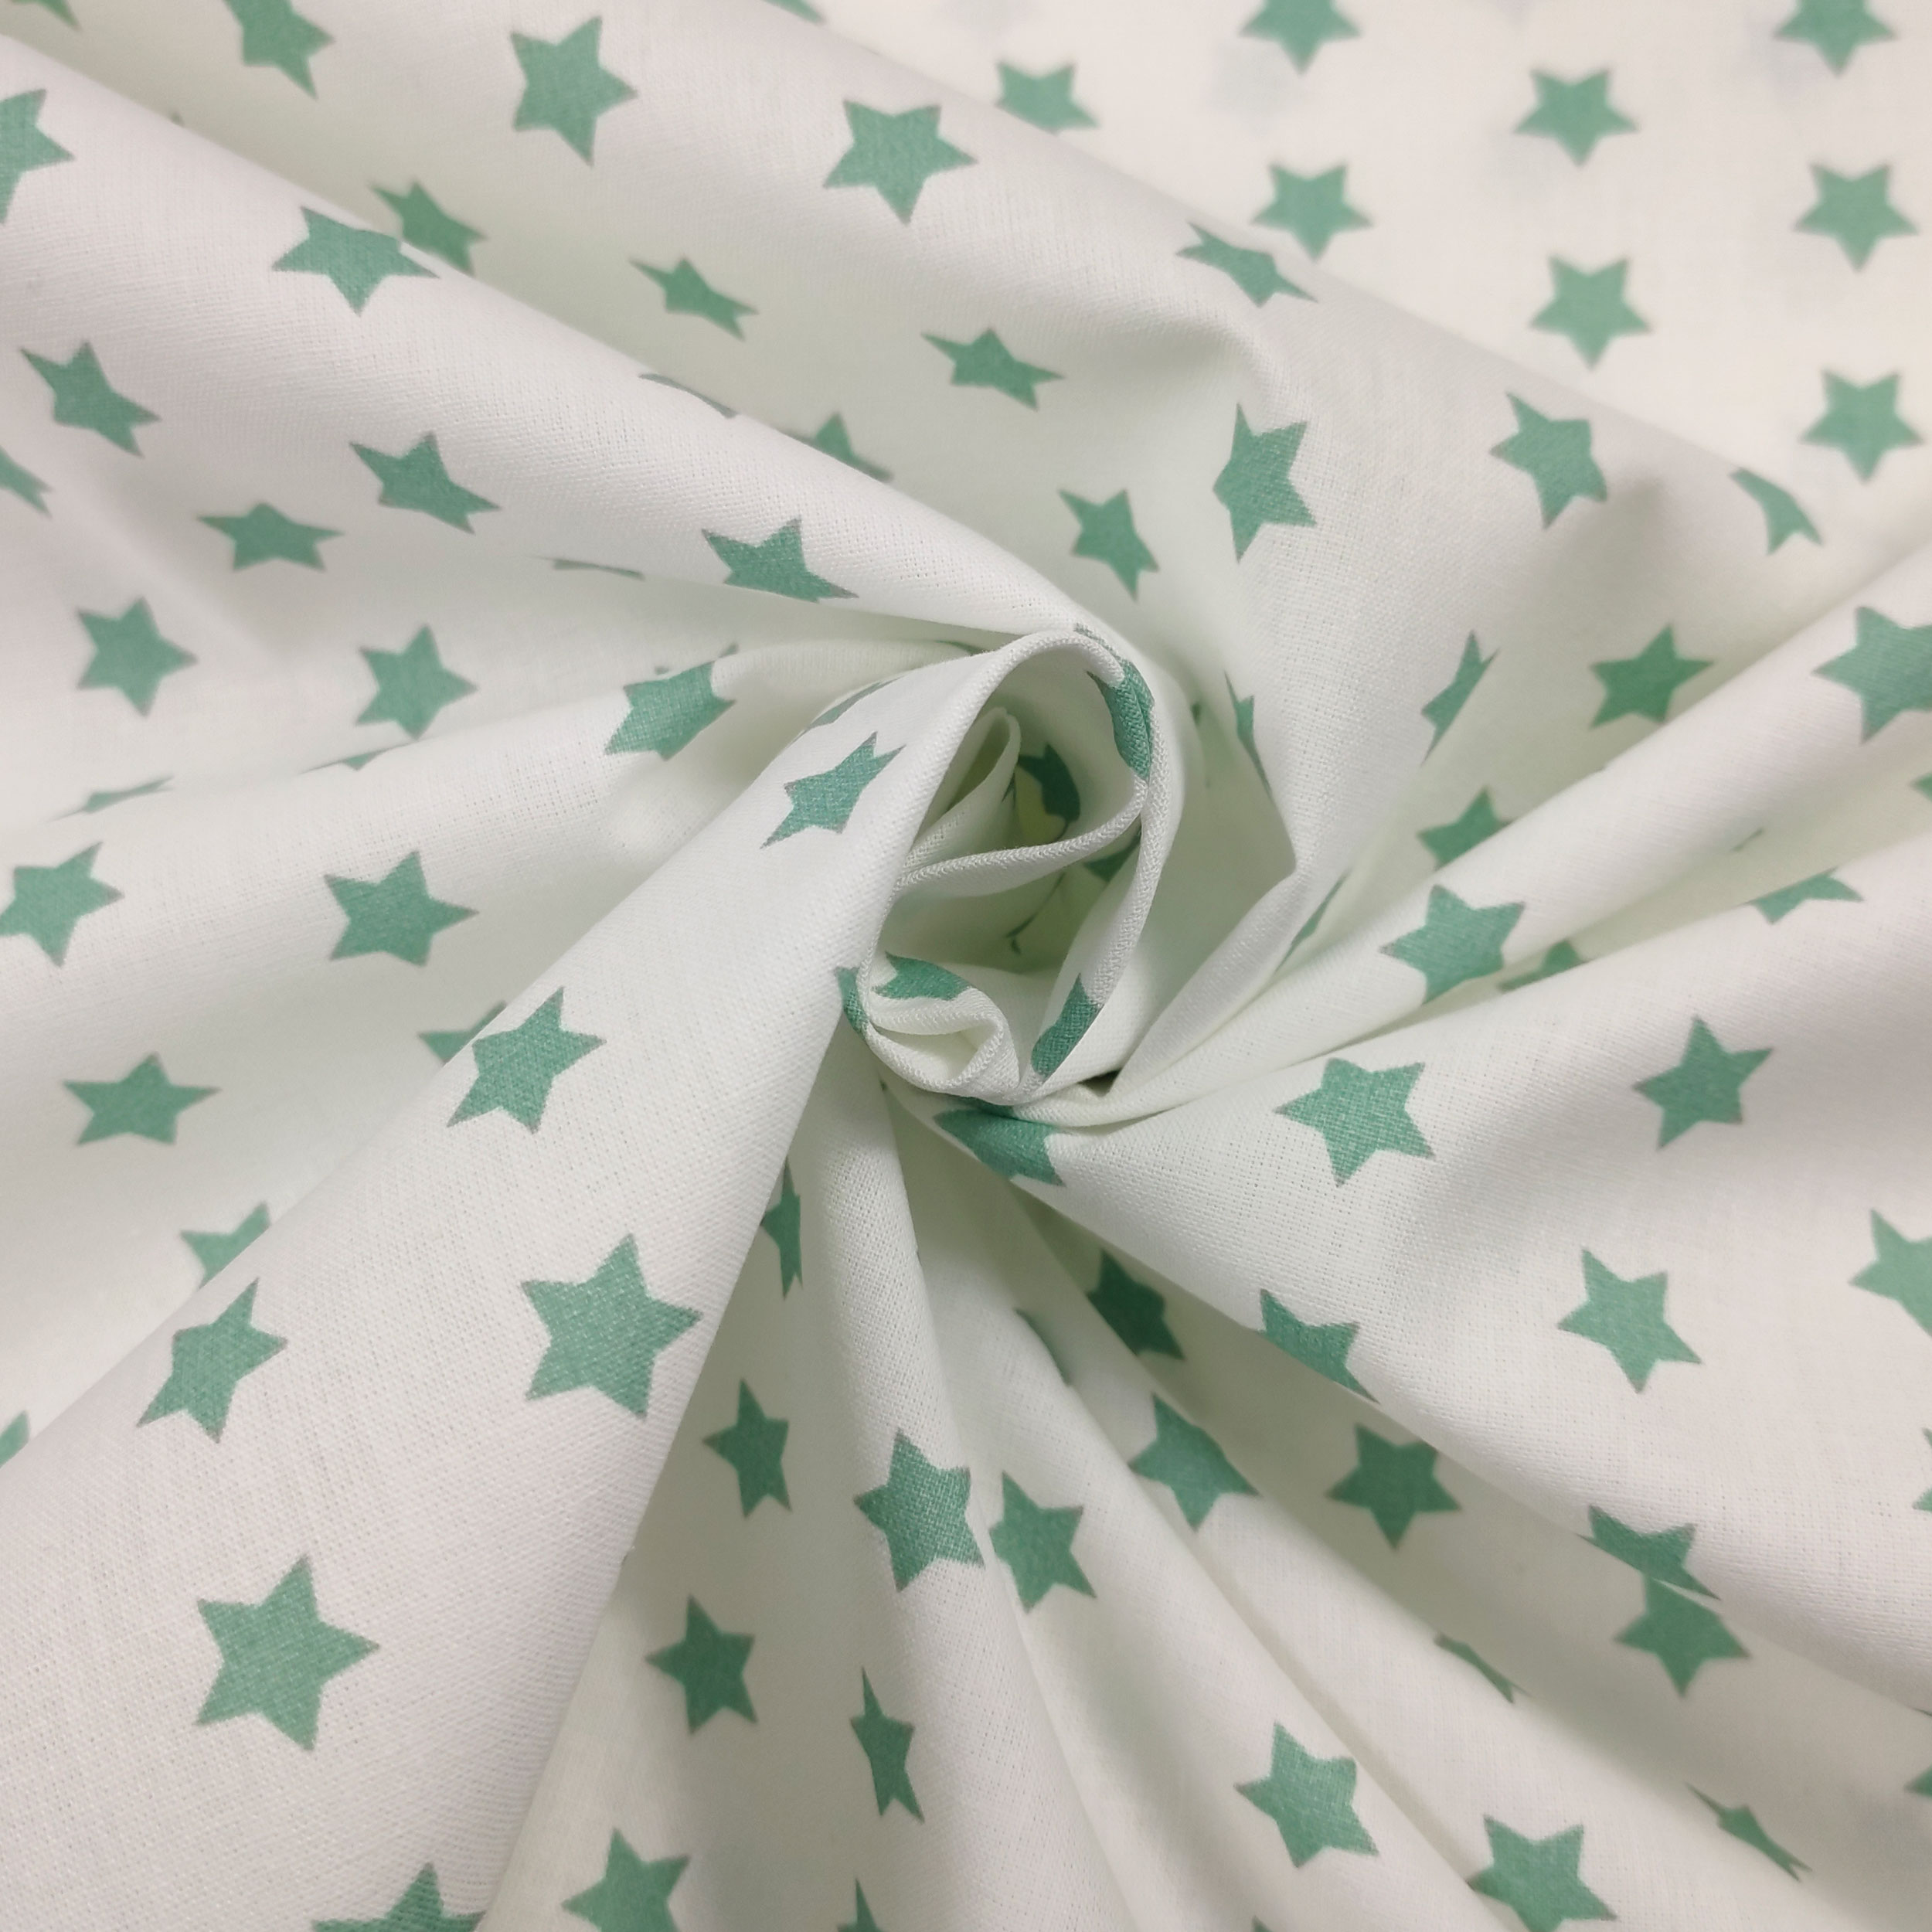 tessuto online stelle verde marino sfondo bianco